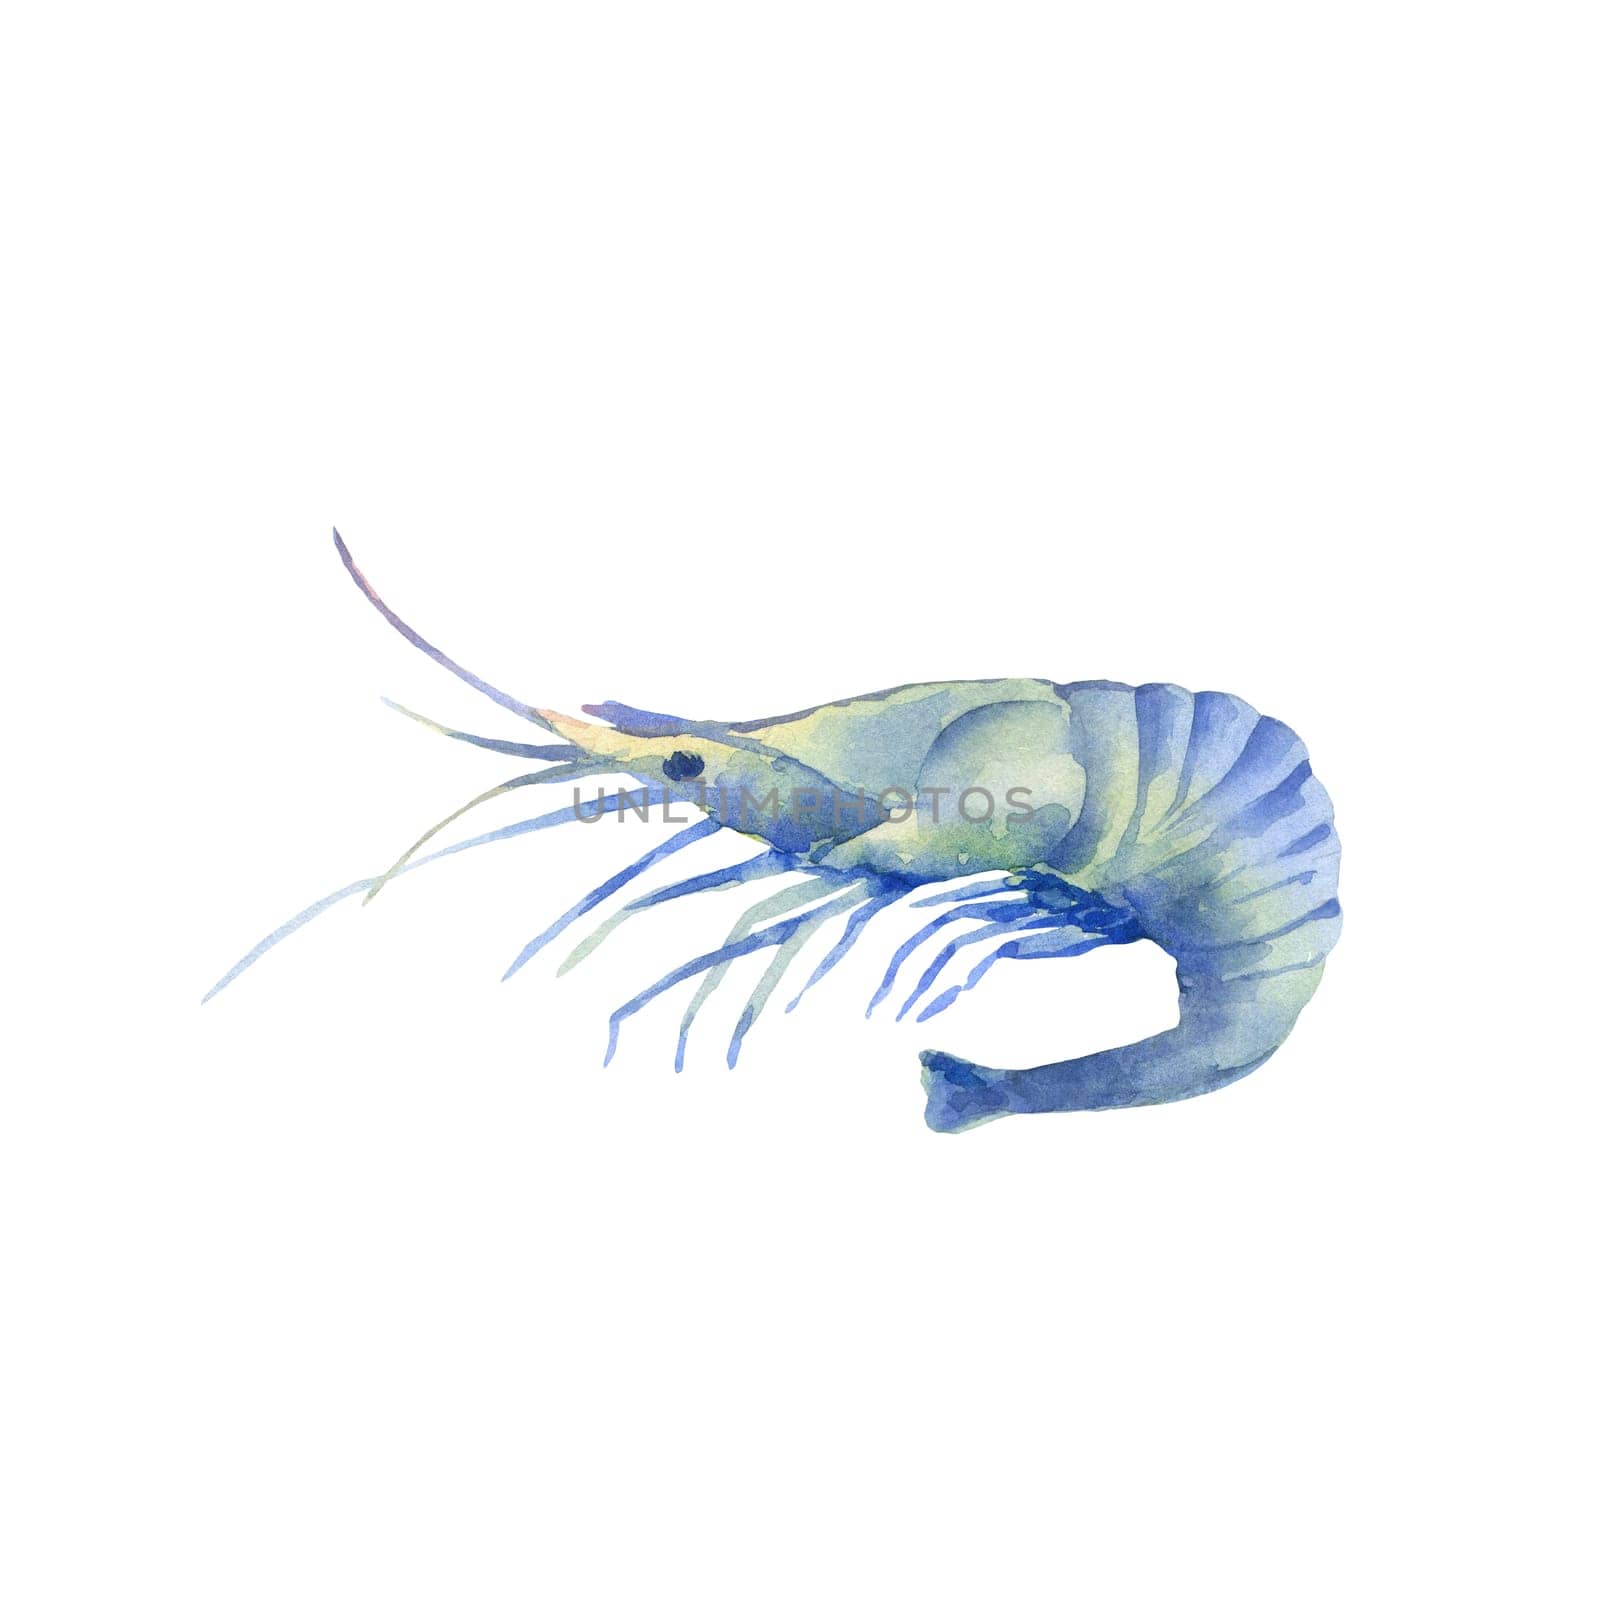 Watercolor illustration blue shrimp isolated on white